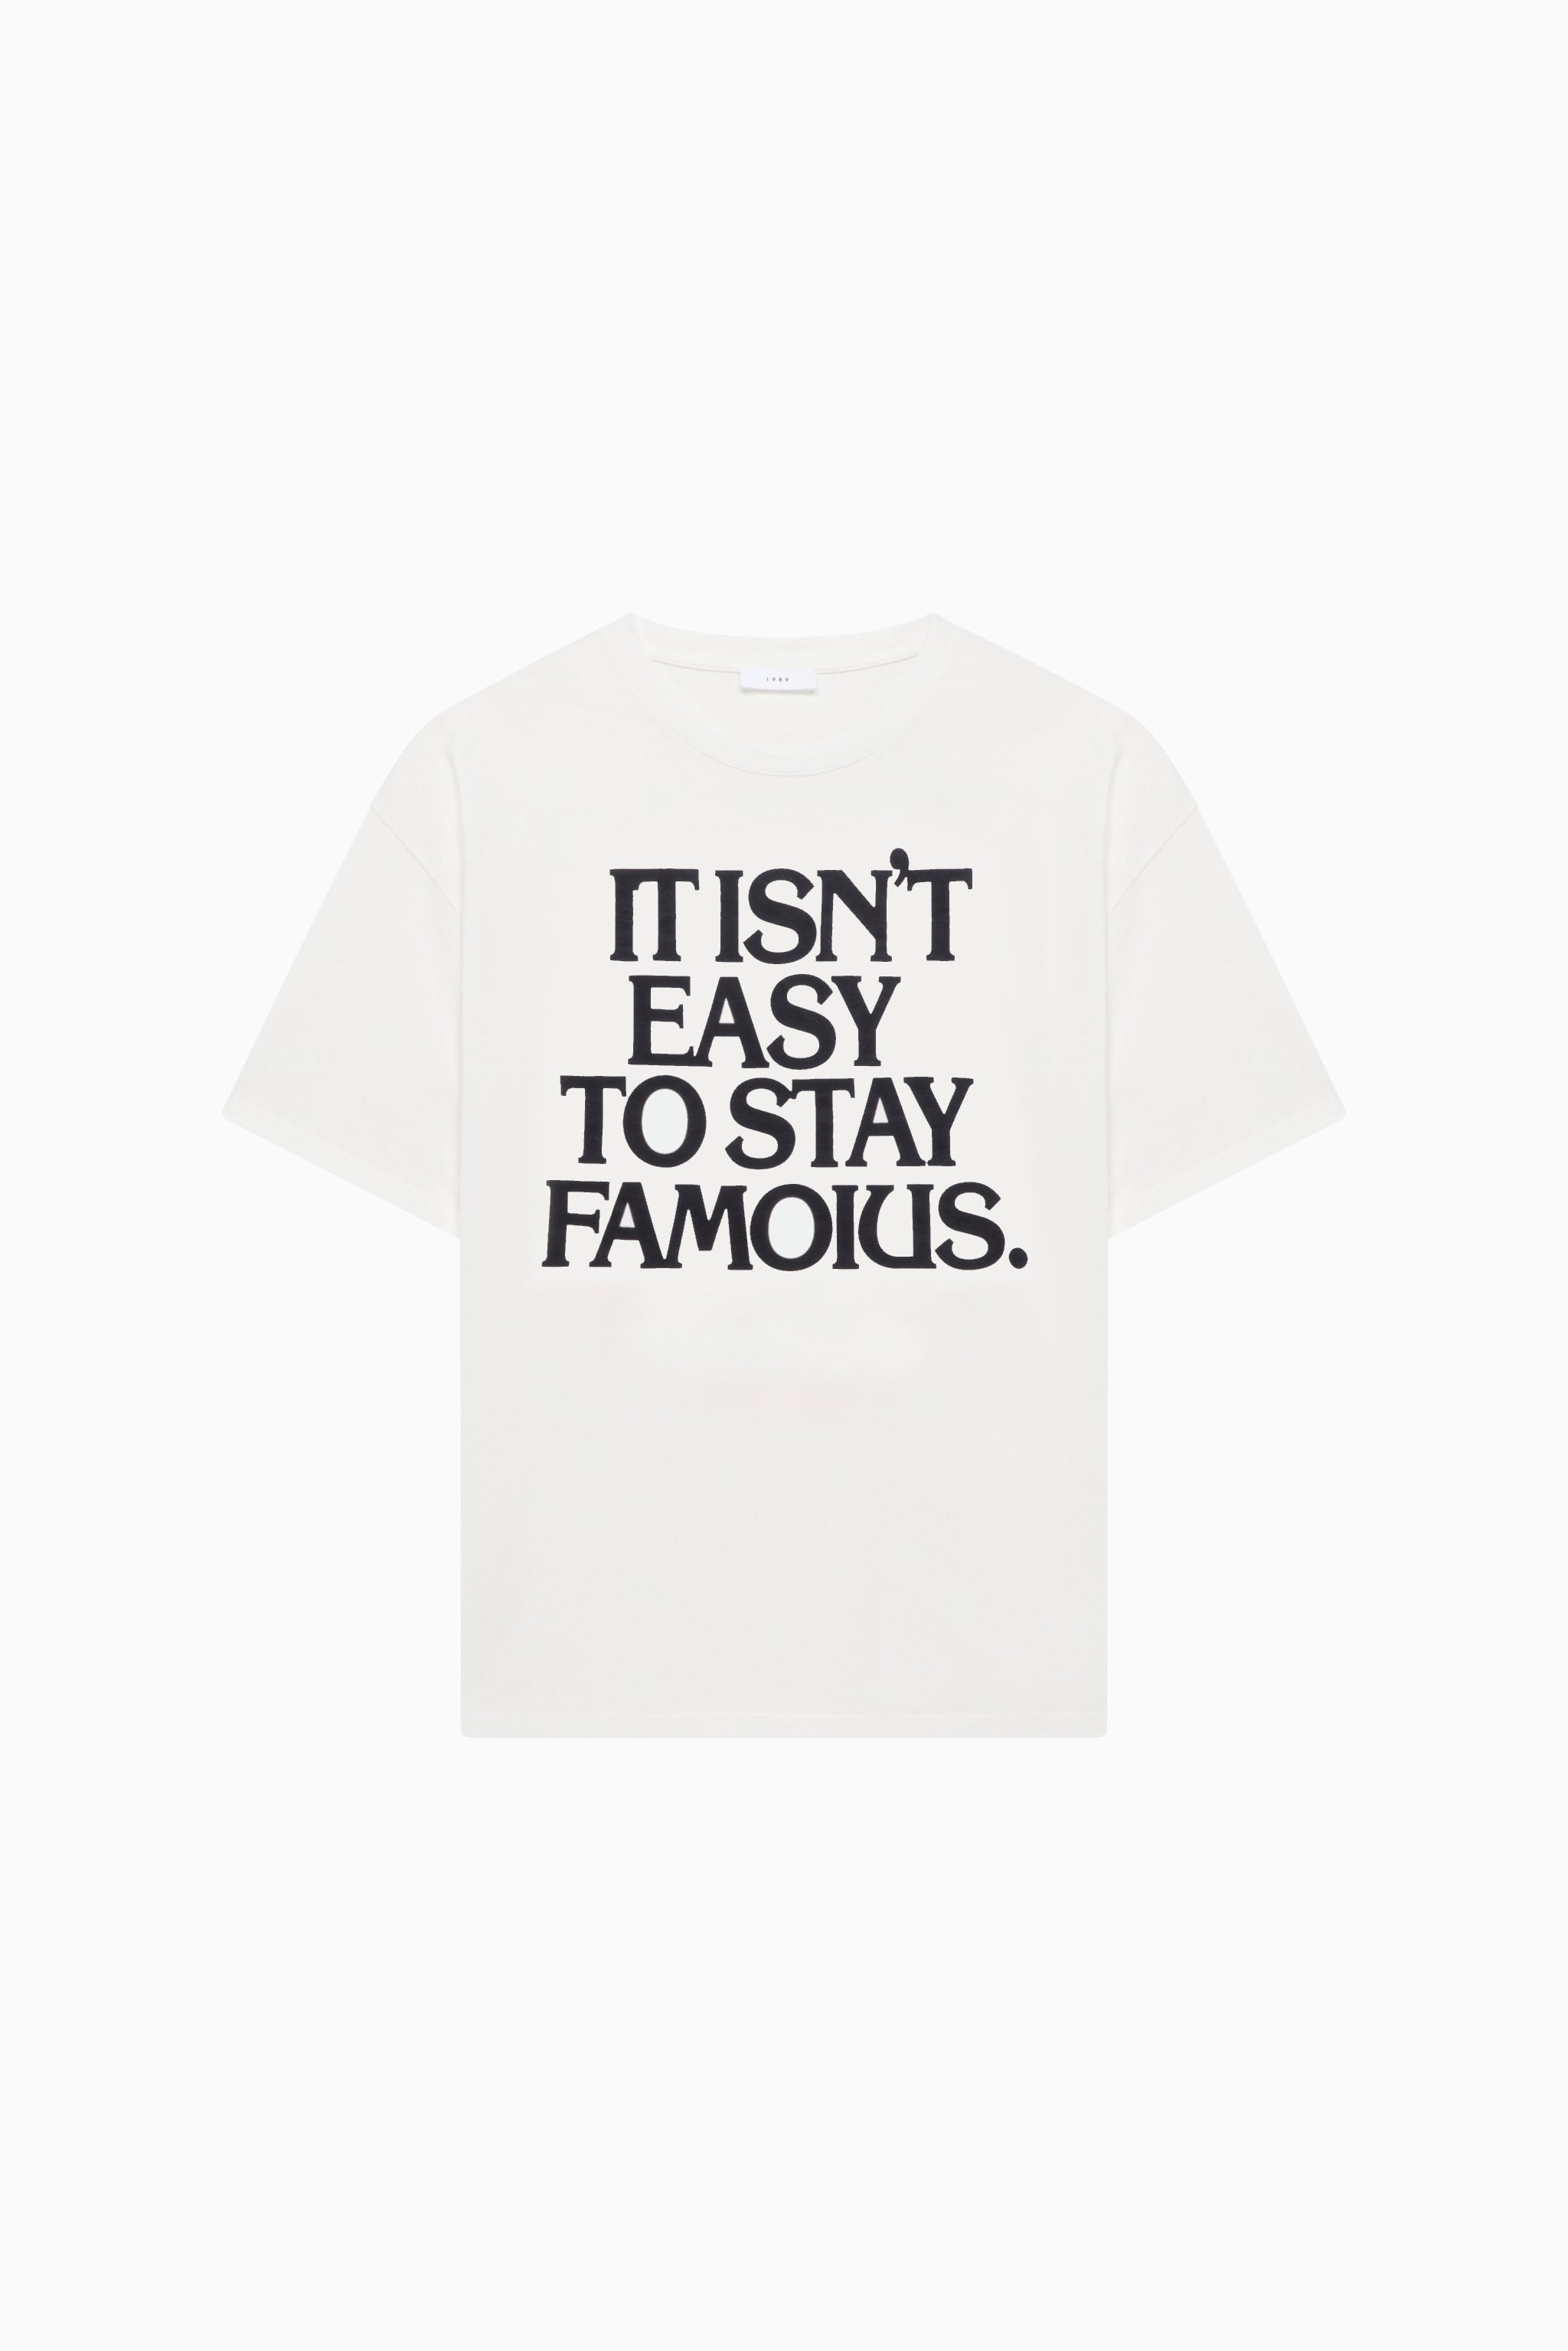 Staying Famous T-Shirt – 1989 STUDIO